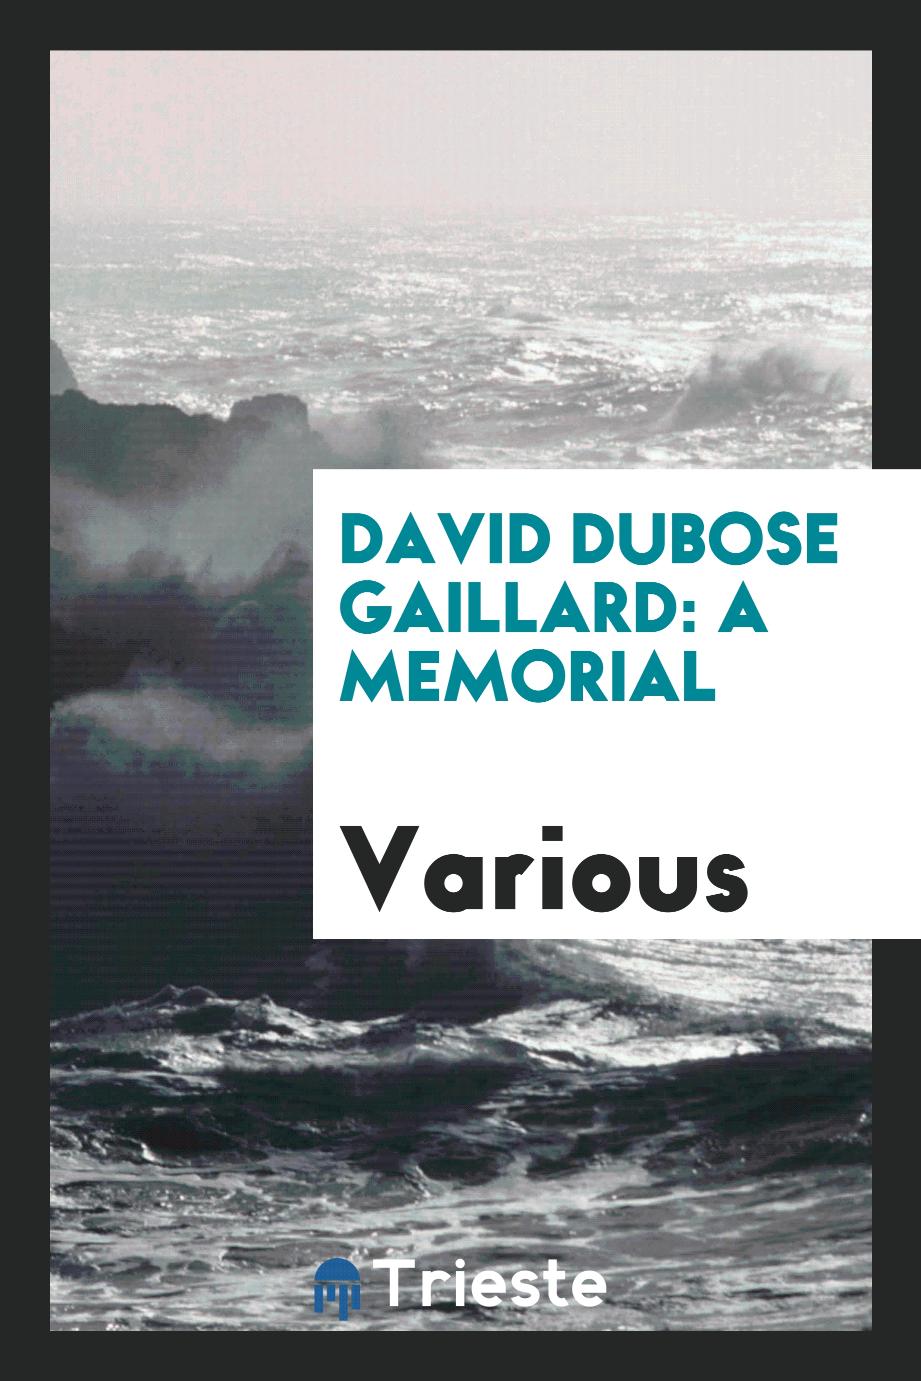 David DuBose Gaillard: a memorial